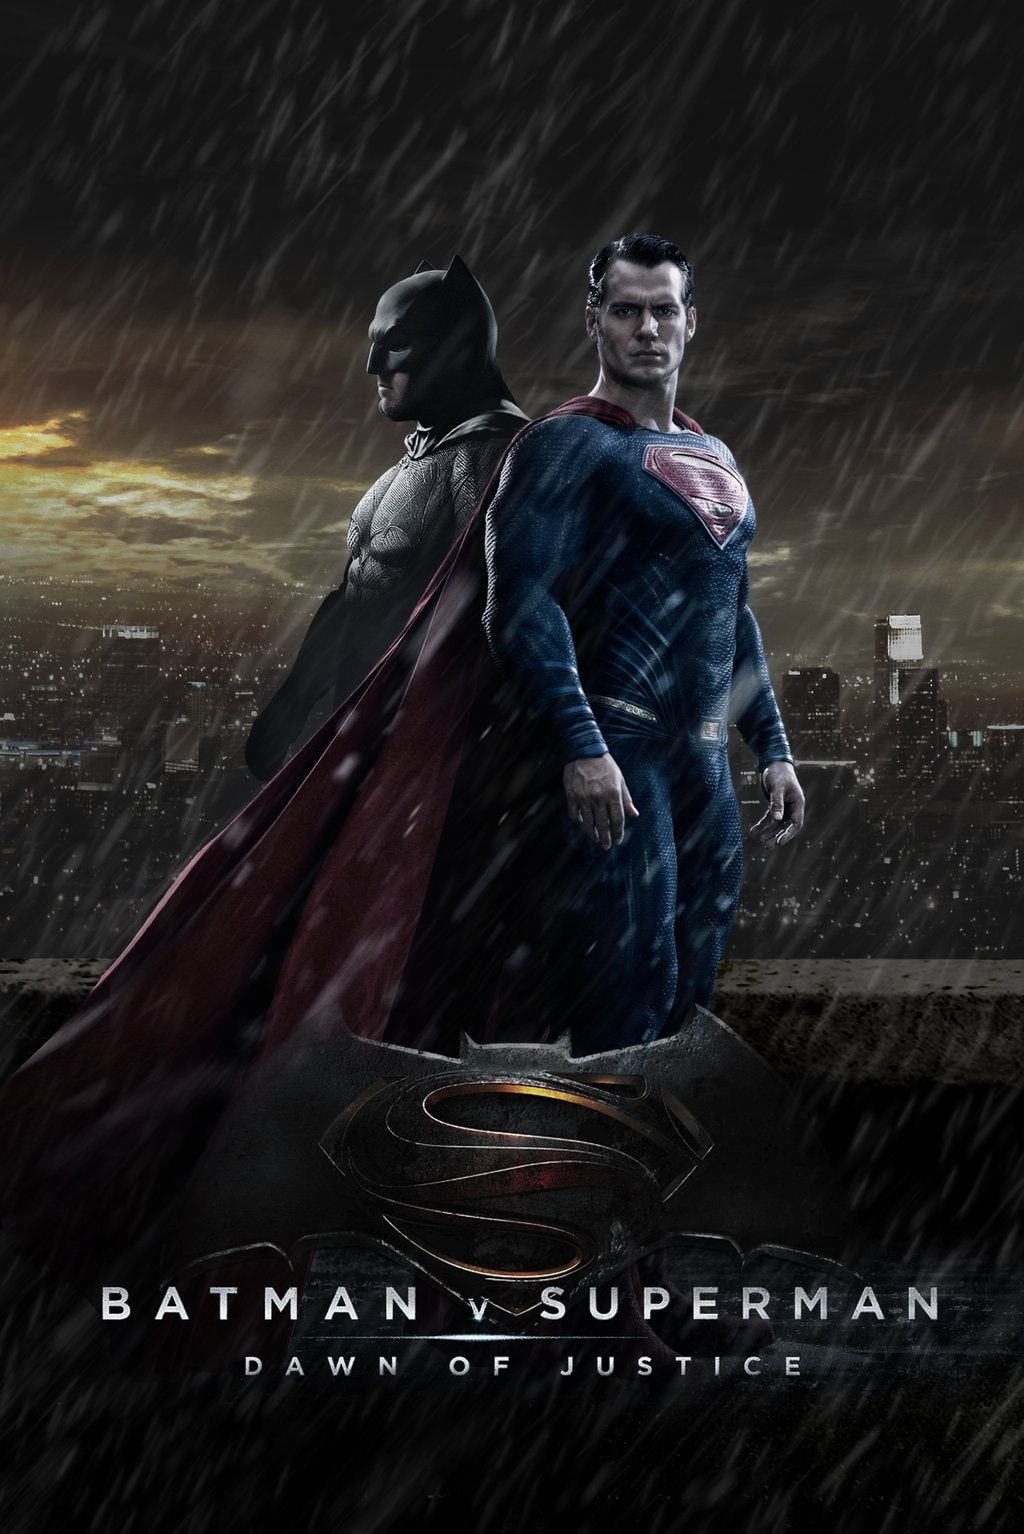 Batman v Superman: Dawn of Justice free